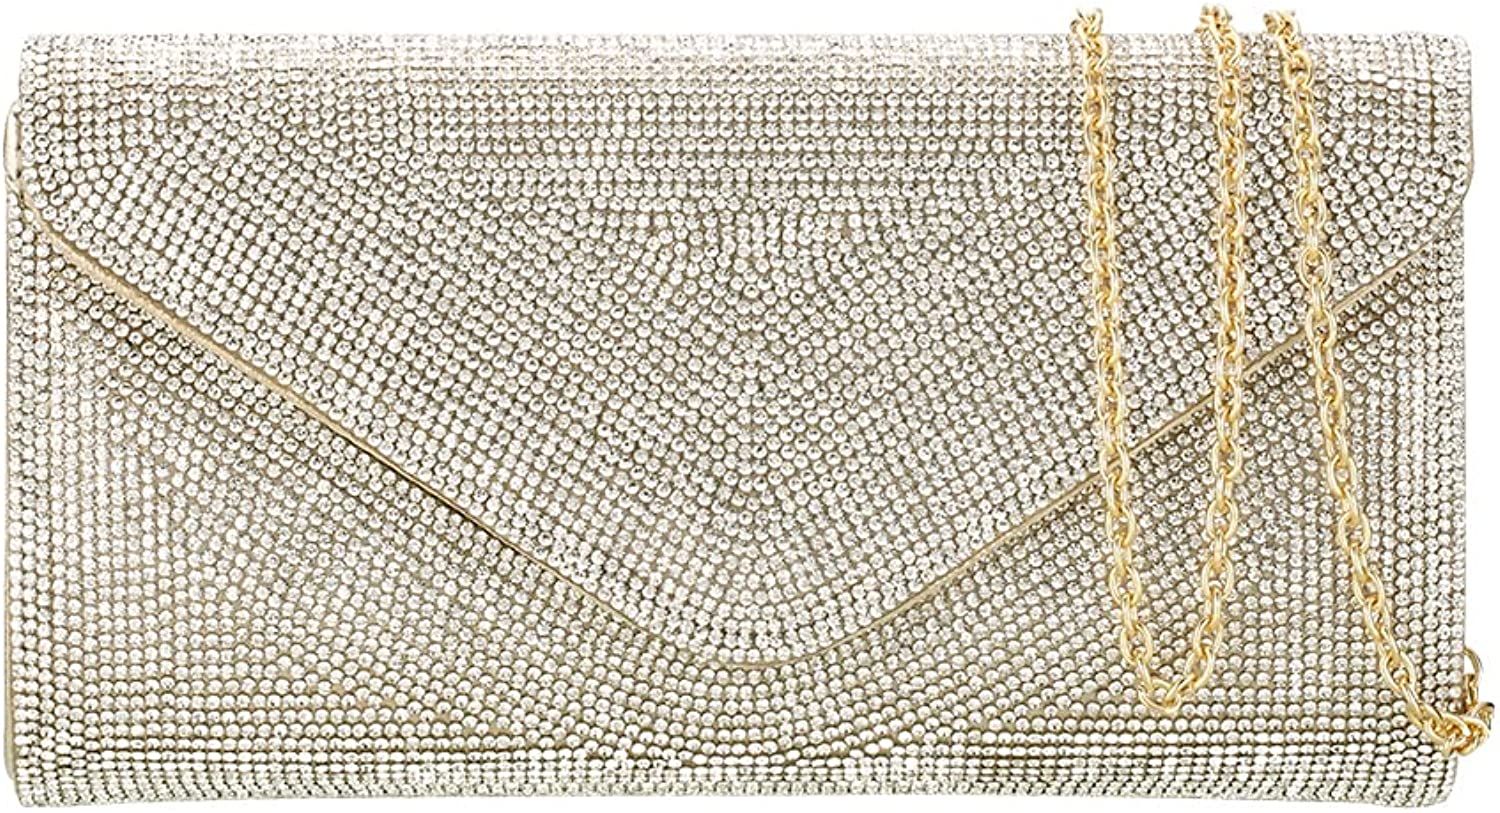 BENCOMOM Women gold clutch Purses Formal Evening Bags Wedding Party Dressy Handbags Bridal Prom shou | Amazon (US)